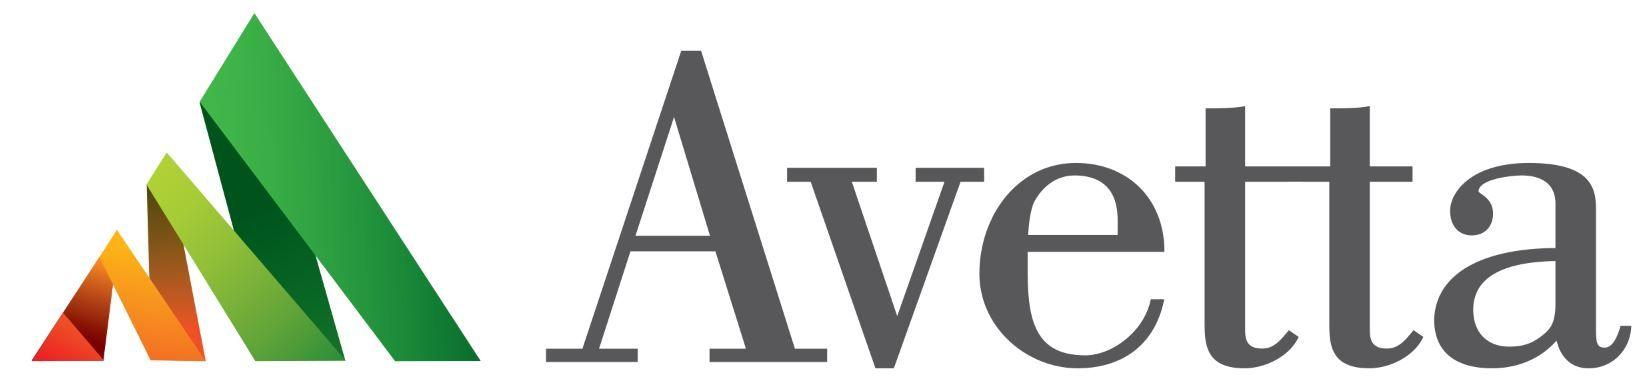 Avetta Logo - avetta-logo - BMI Mechanical Heating, Ventilation and Air Conditioning